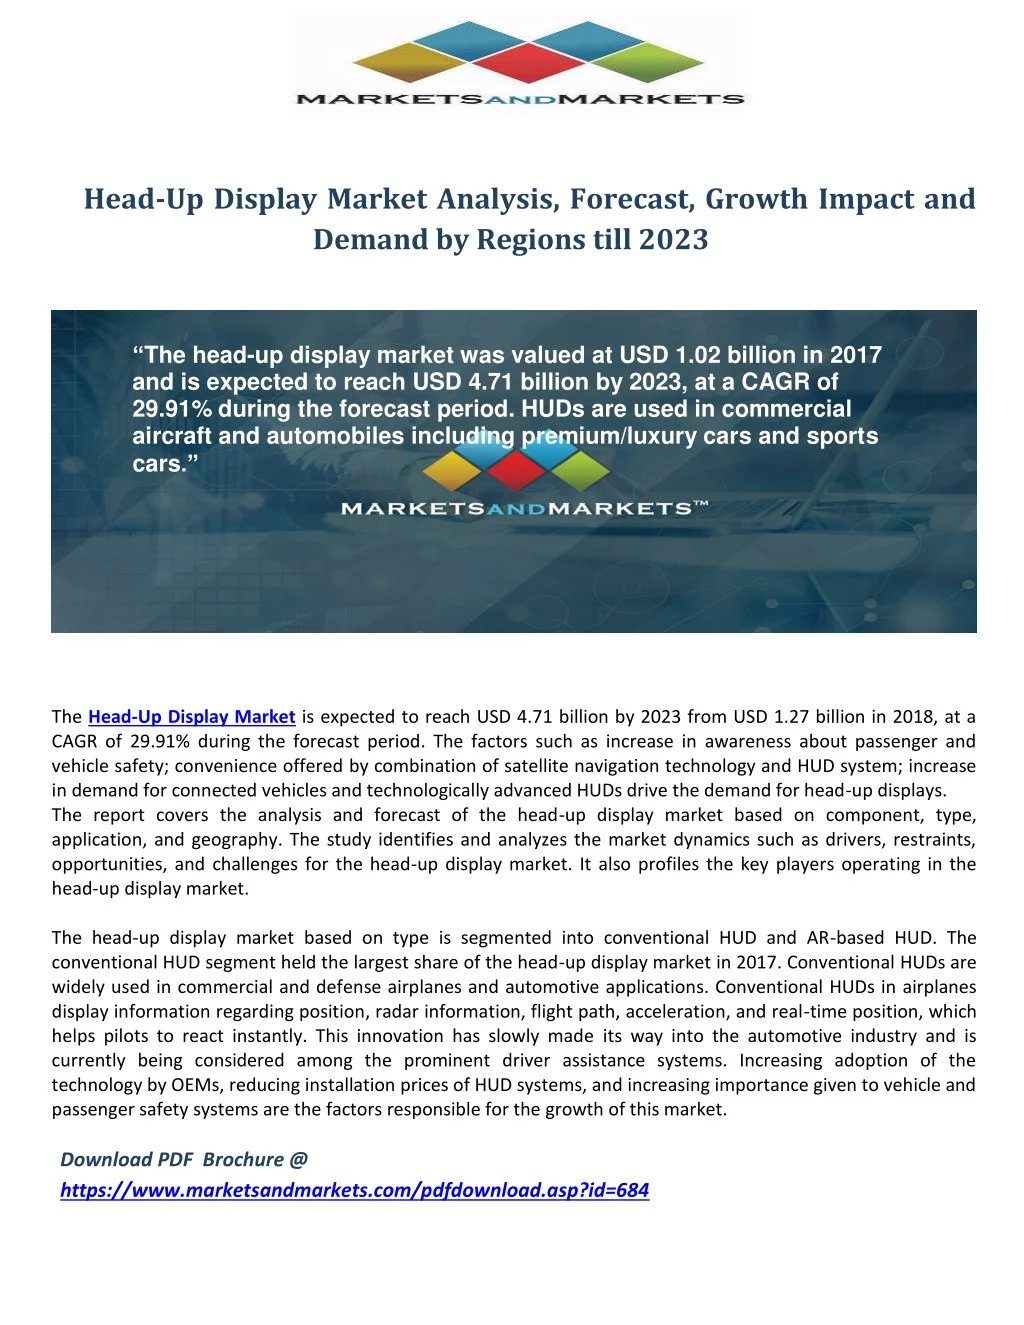 head up display market analysis forecast growth